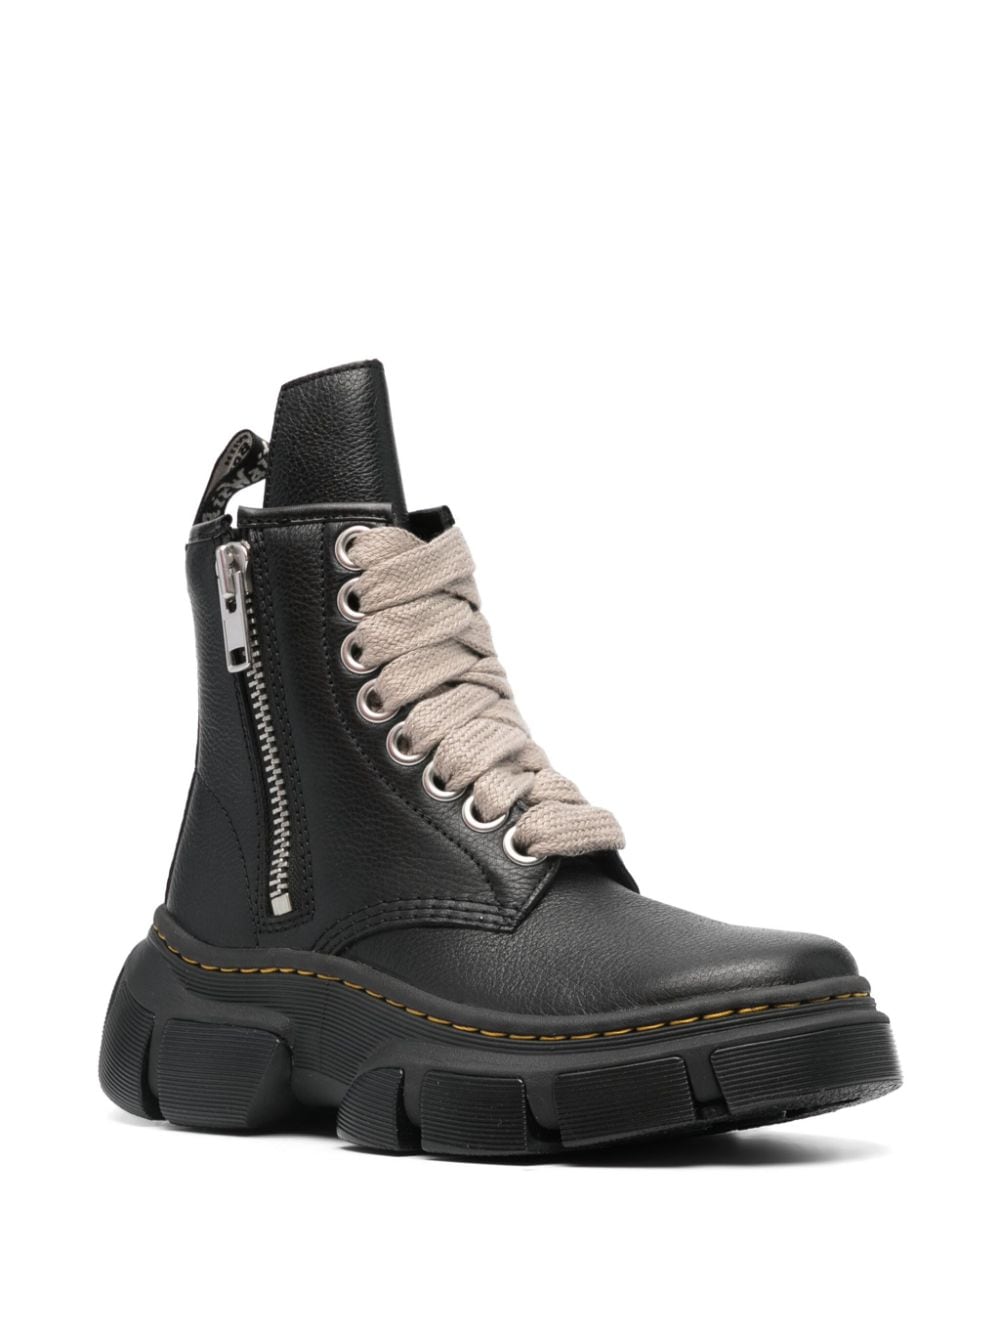 Rick Owens x Dr. Martens 1460 leather boots Black